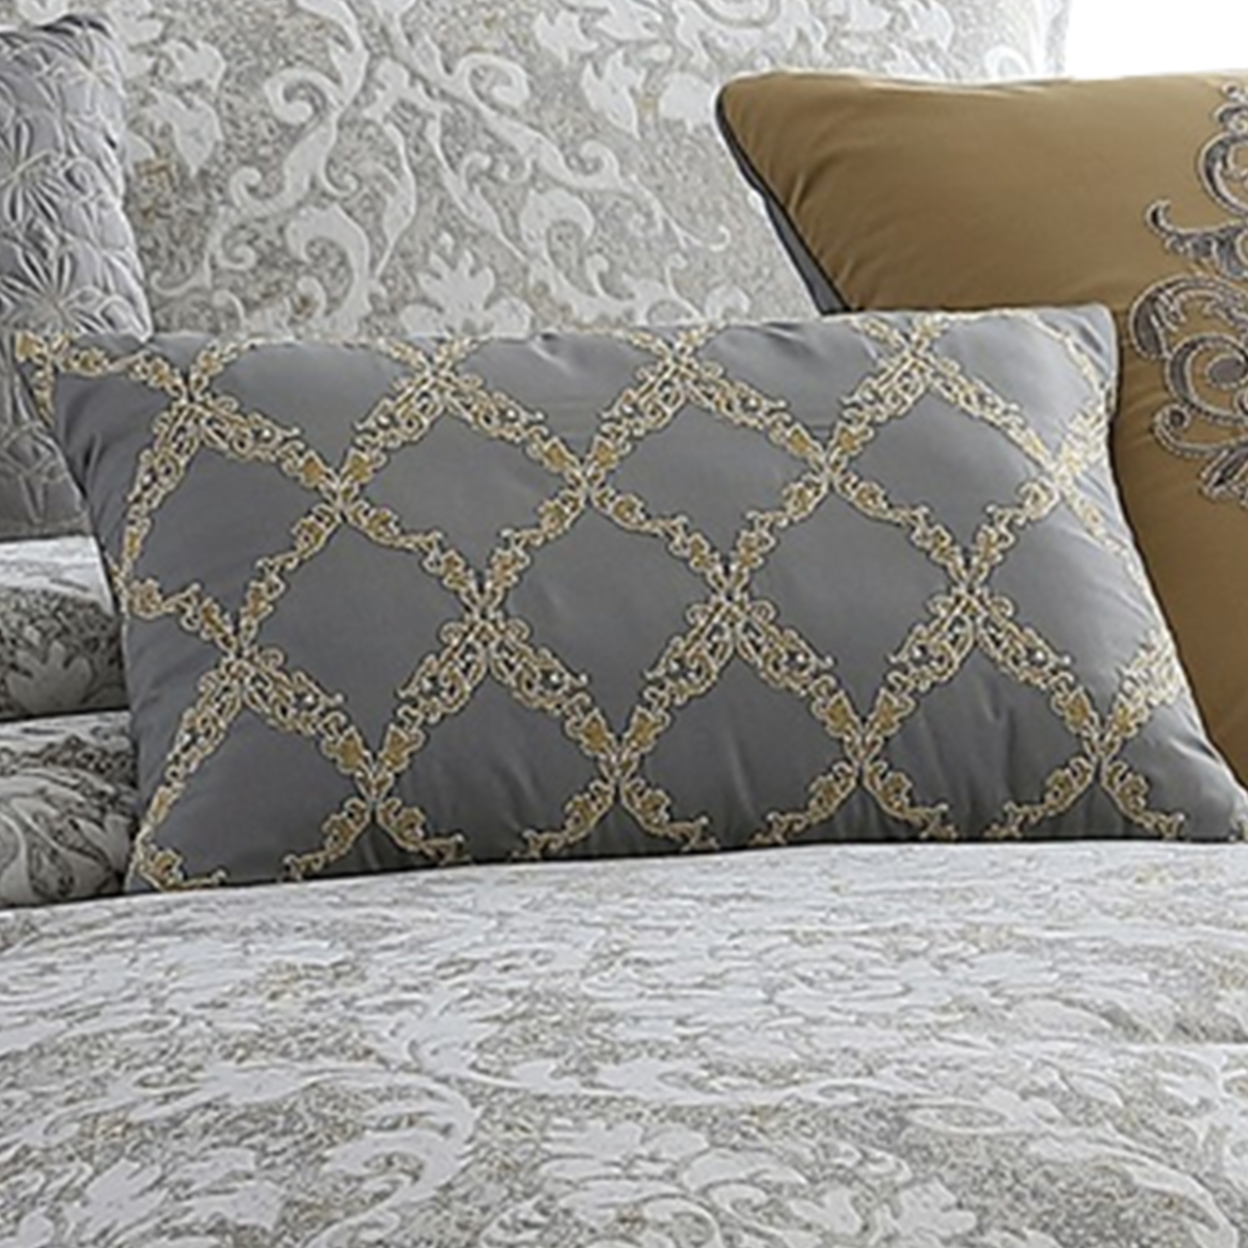 9 Piece King Polyester Comforter Set With Medallion Print, Gray And Gold- Saltoro Sherpi